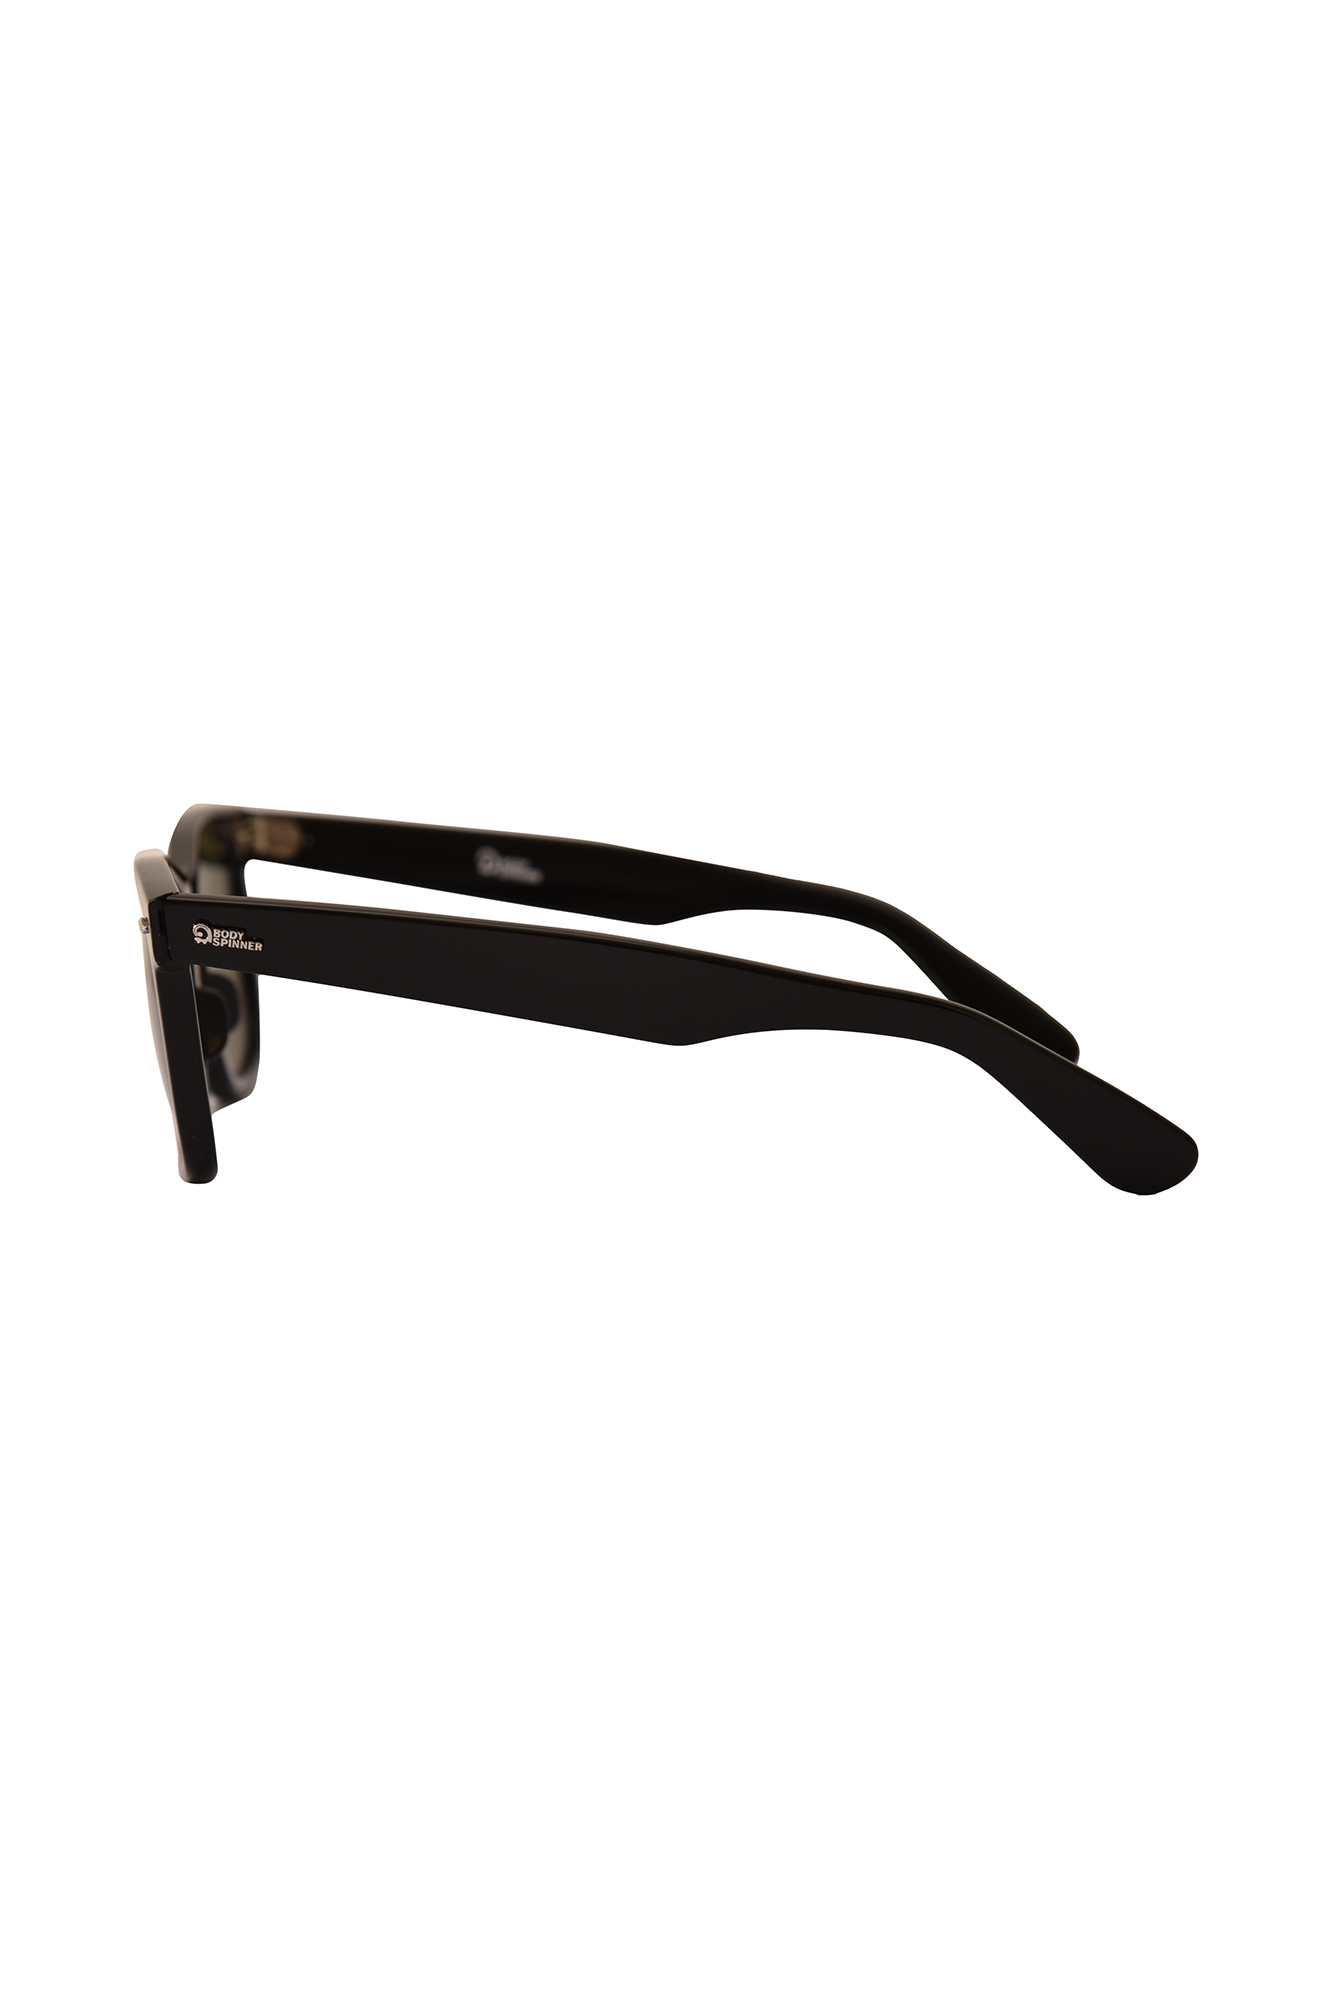 عینک wayfarer52mm sunglasses